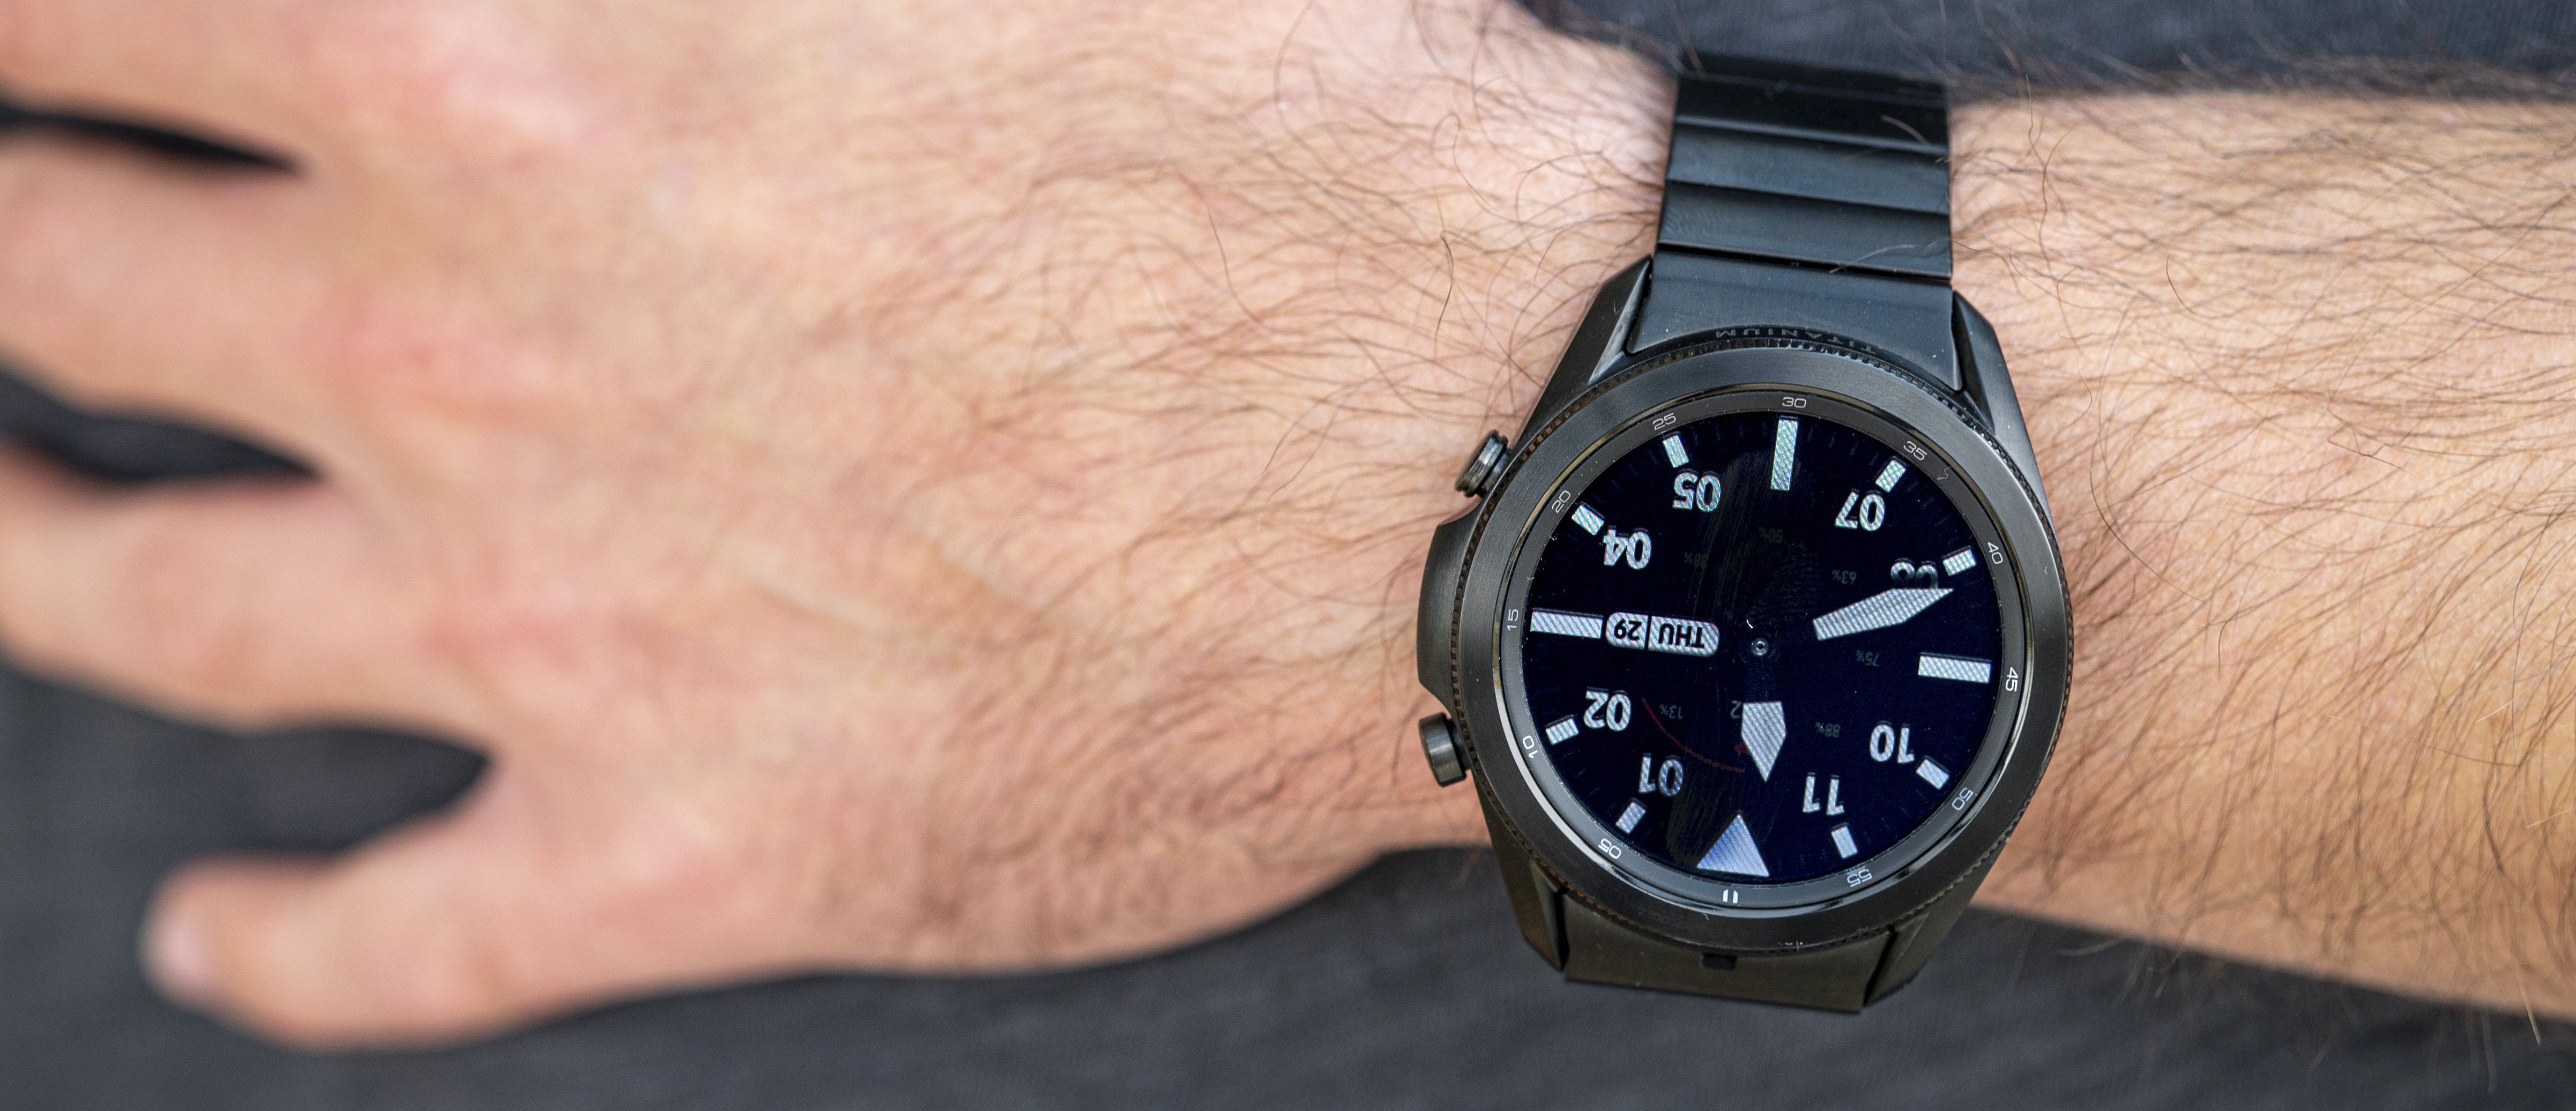 Samsung watch 45. Самсунг галакси вотч 3. Самсунг галакси вотч 3 45 мм. Samsung Galaxy watch 3 Titanium. Samsung Galaxy watch 3 45mm Titanium.